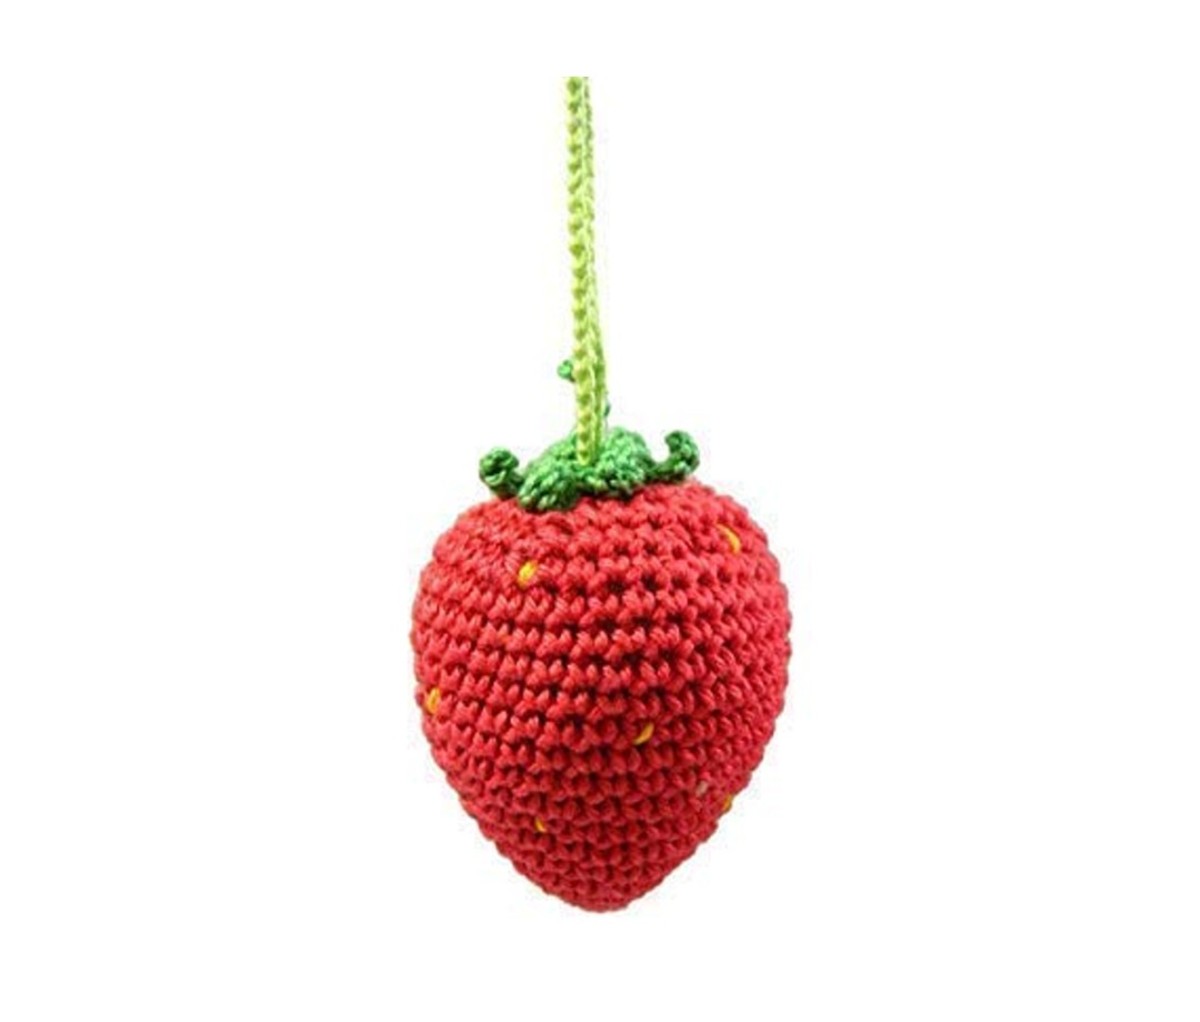 A crochet strawberry